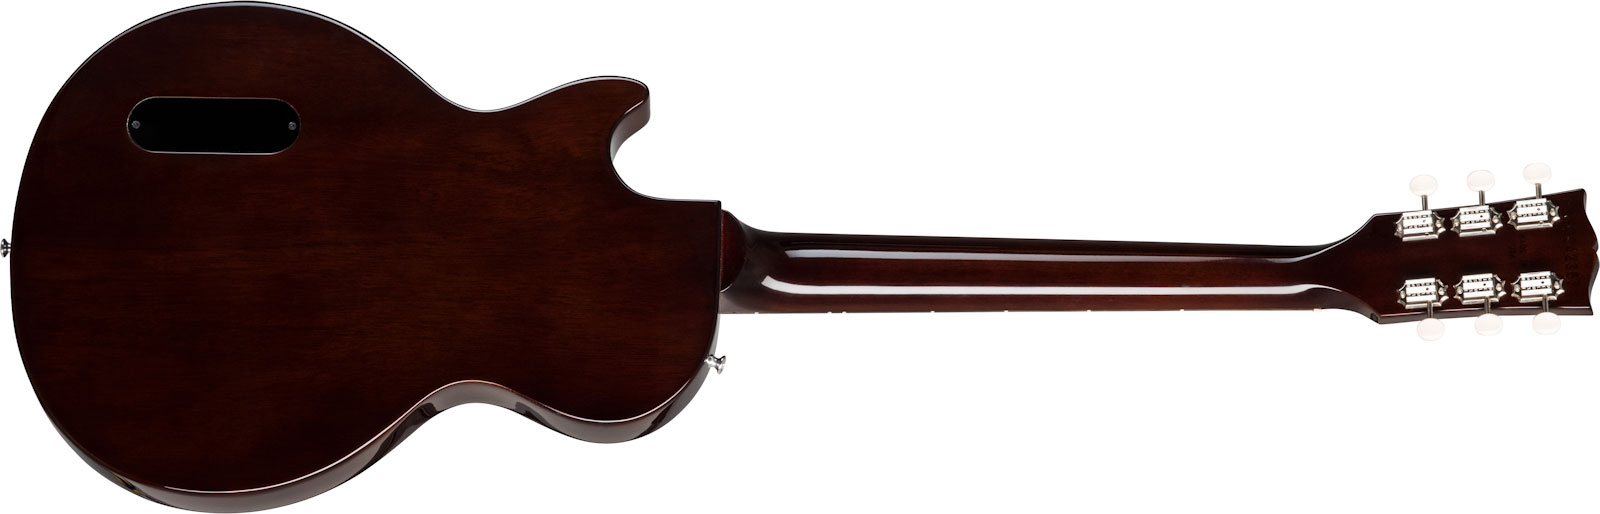 Gibson Les Paul Special Lh Original Gaucher 2p90 Ht Rw - Vintage Tobacco Burst - Left-handed electric guitar - Variation 1